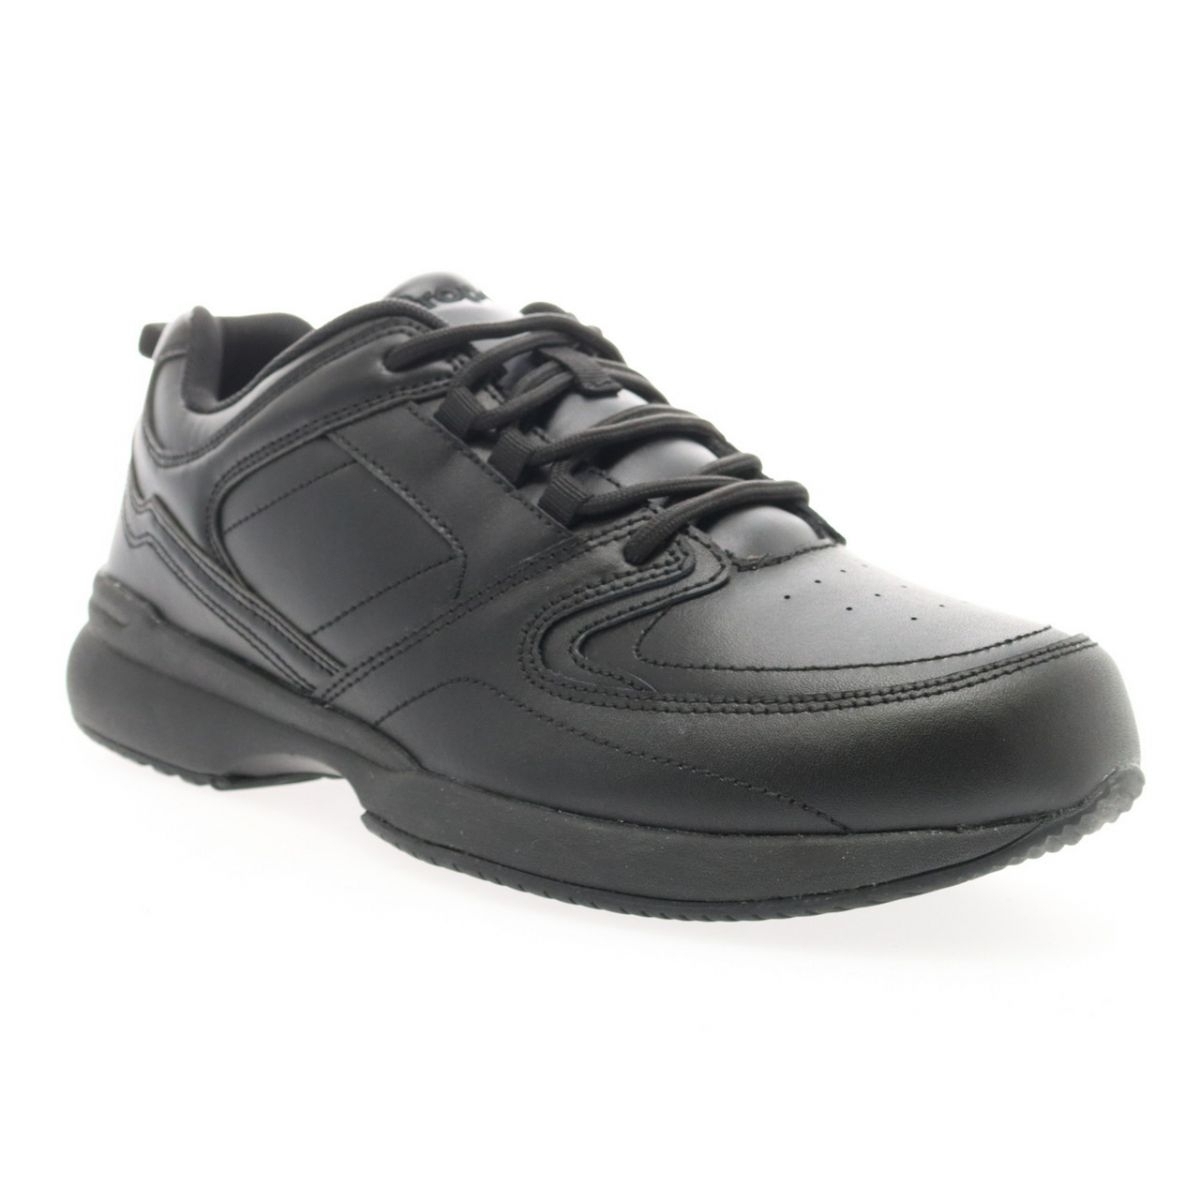 Propet Men's Life Walker Sport Sneaker Black - MAA272LBLK BLACK - BLACK, 10